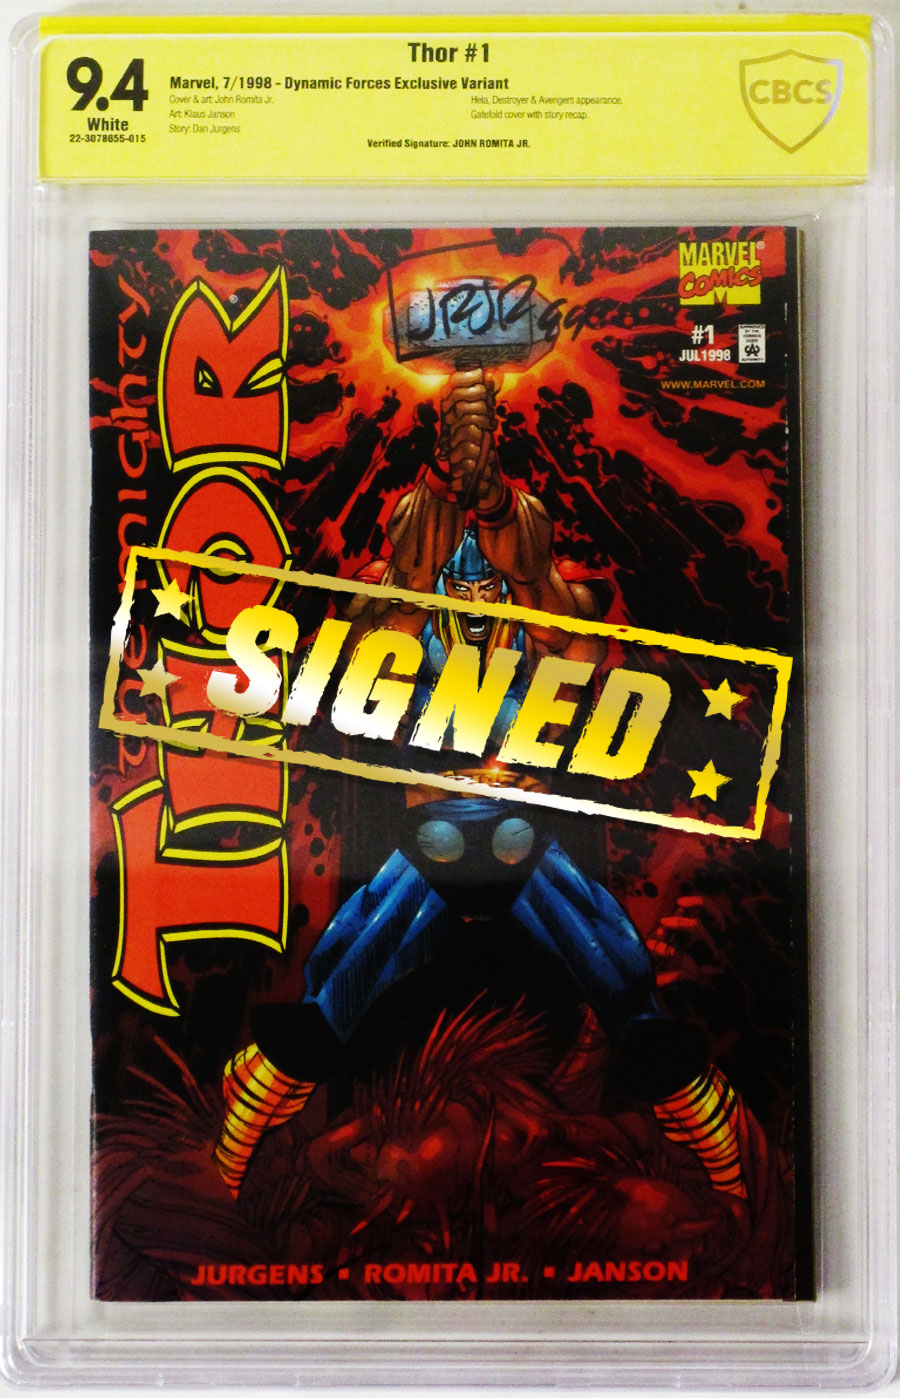 Thor Vol 2 #1 Cover G DF Variant Signed by John Romita Jr CBCS 9.4